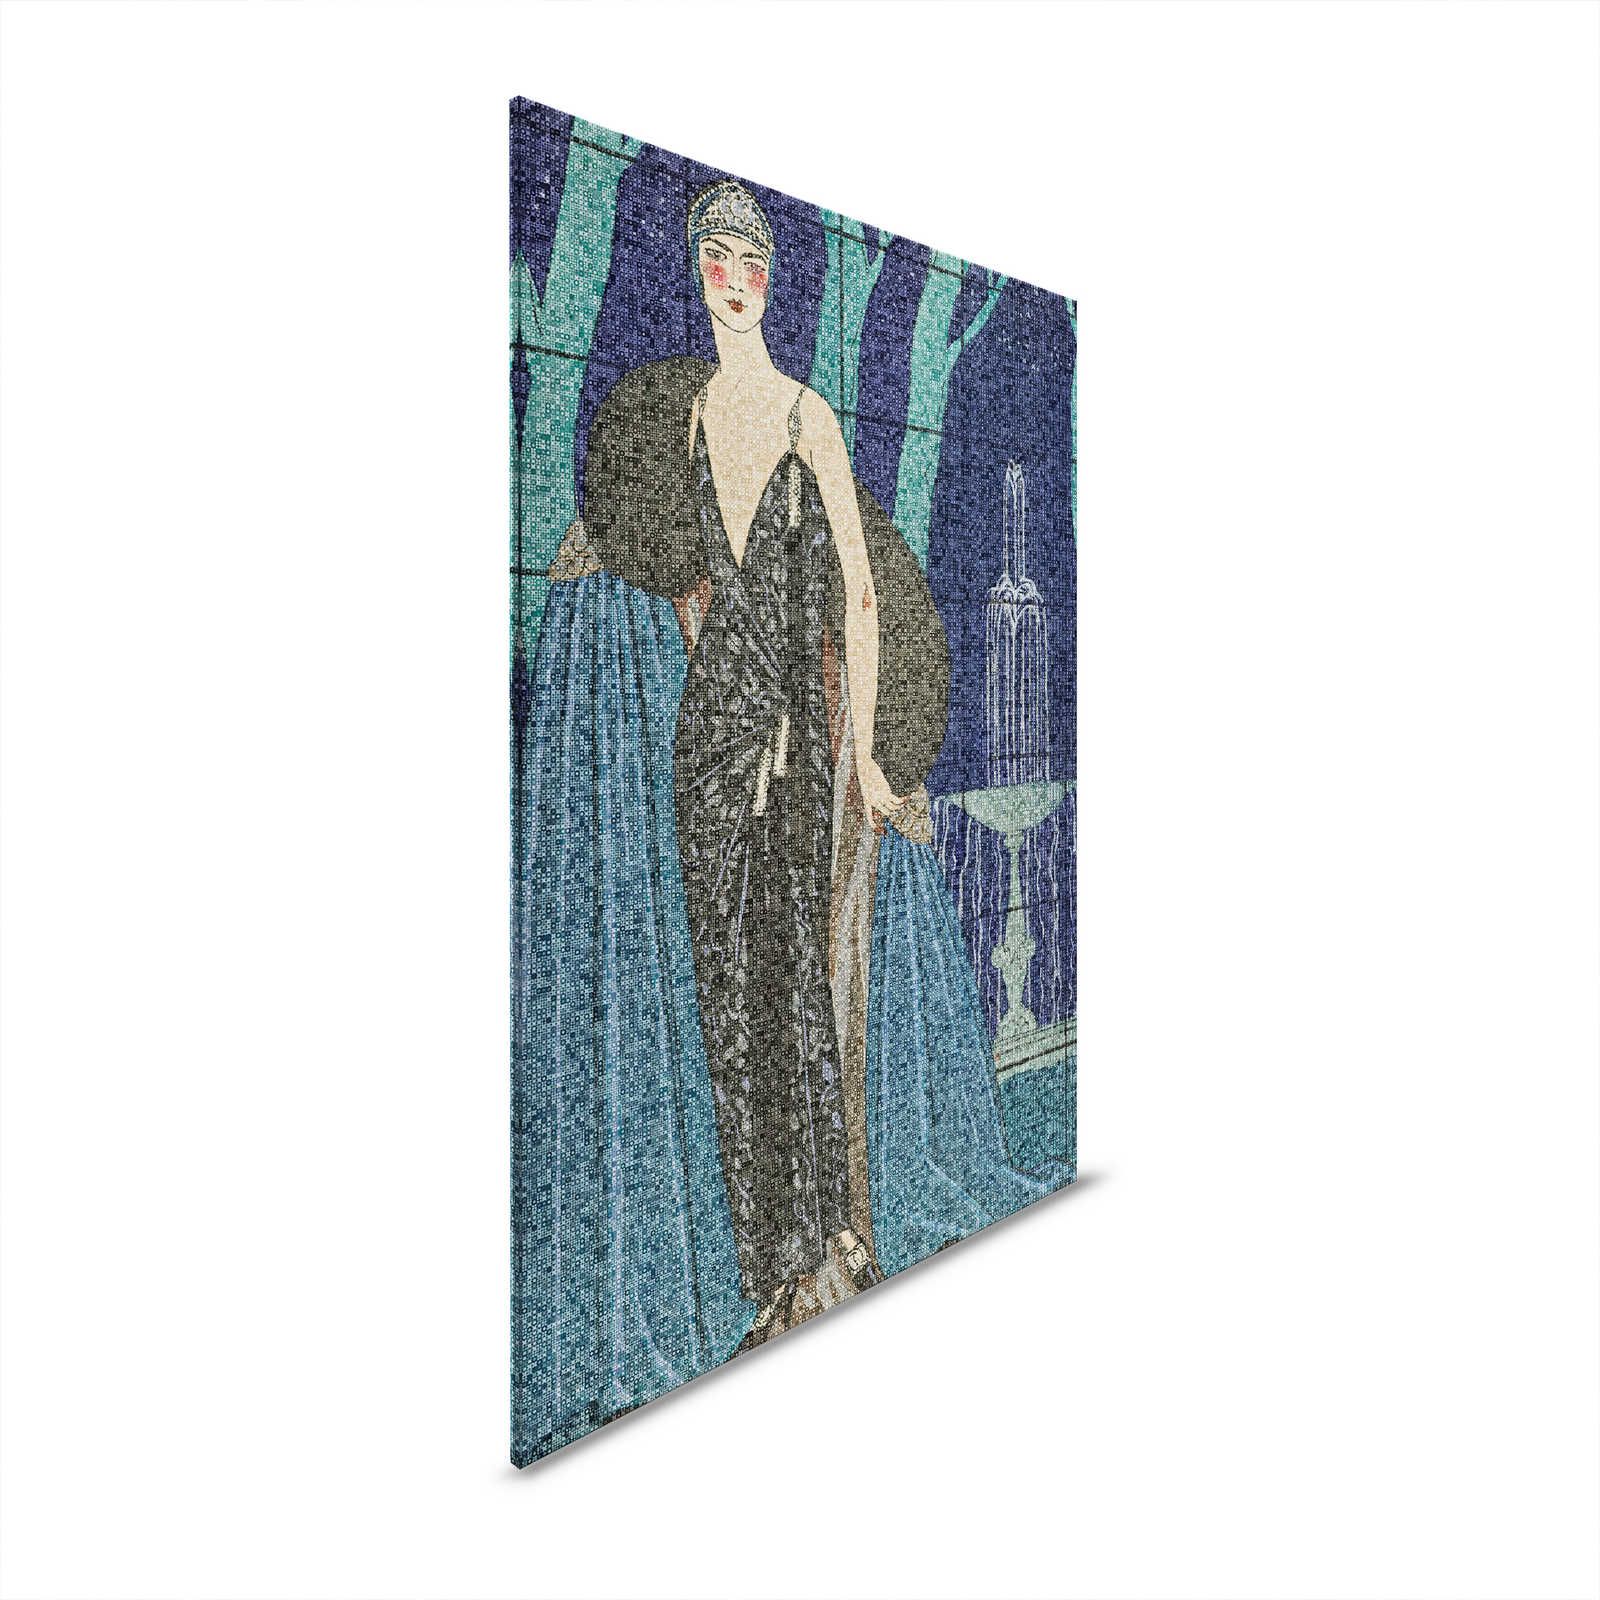 Scala 3 - Art Deco Canvas painting elegant women motif - 0,80 m x 1,20 m
